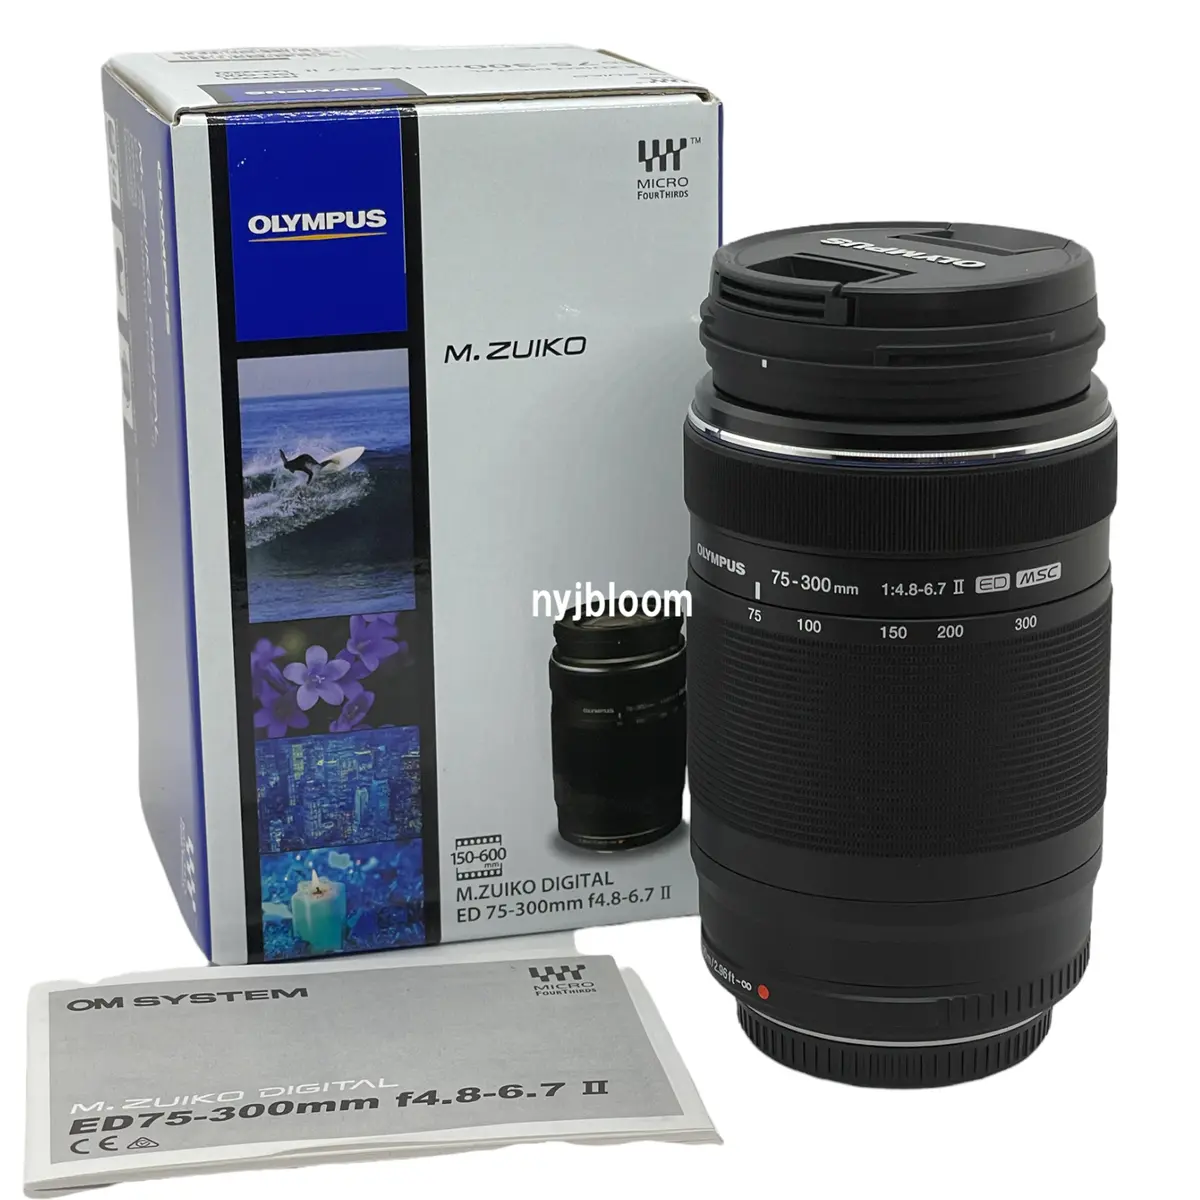 New Olympus M.ZUIKO DIGITAL ED 75-300mm f/4.8 - 6.7 II Lens